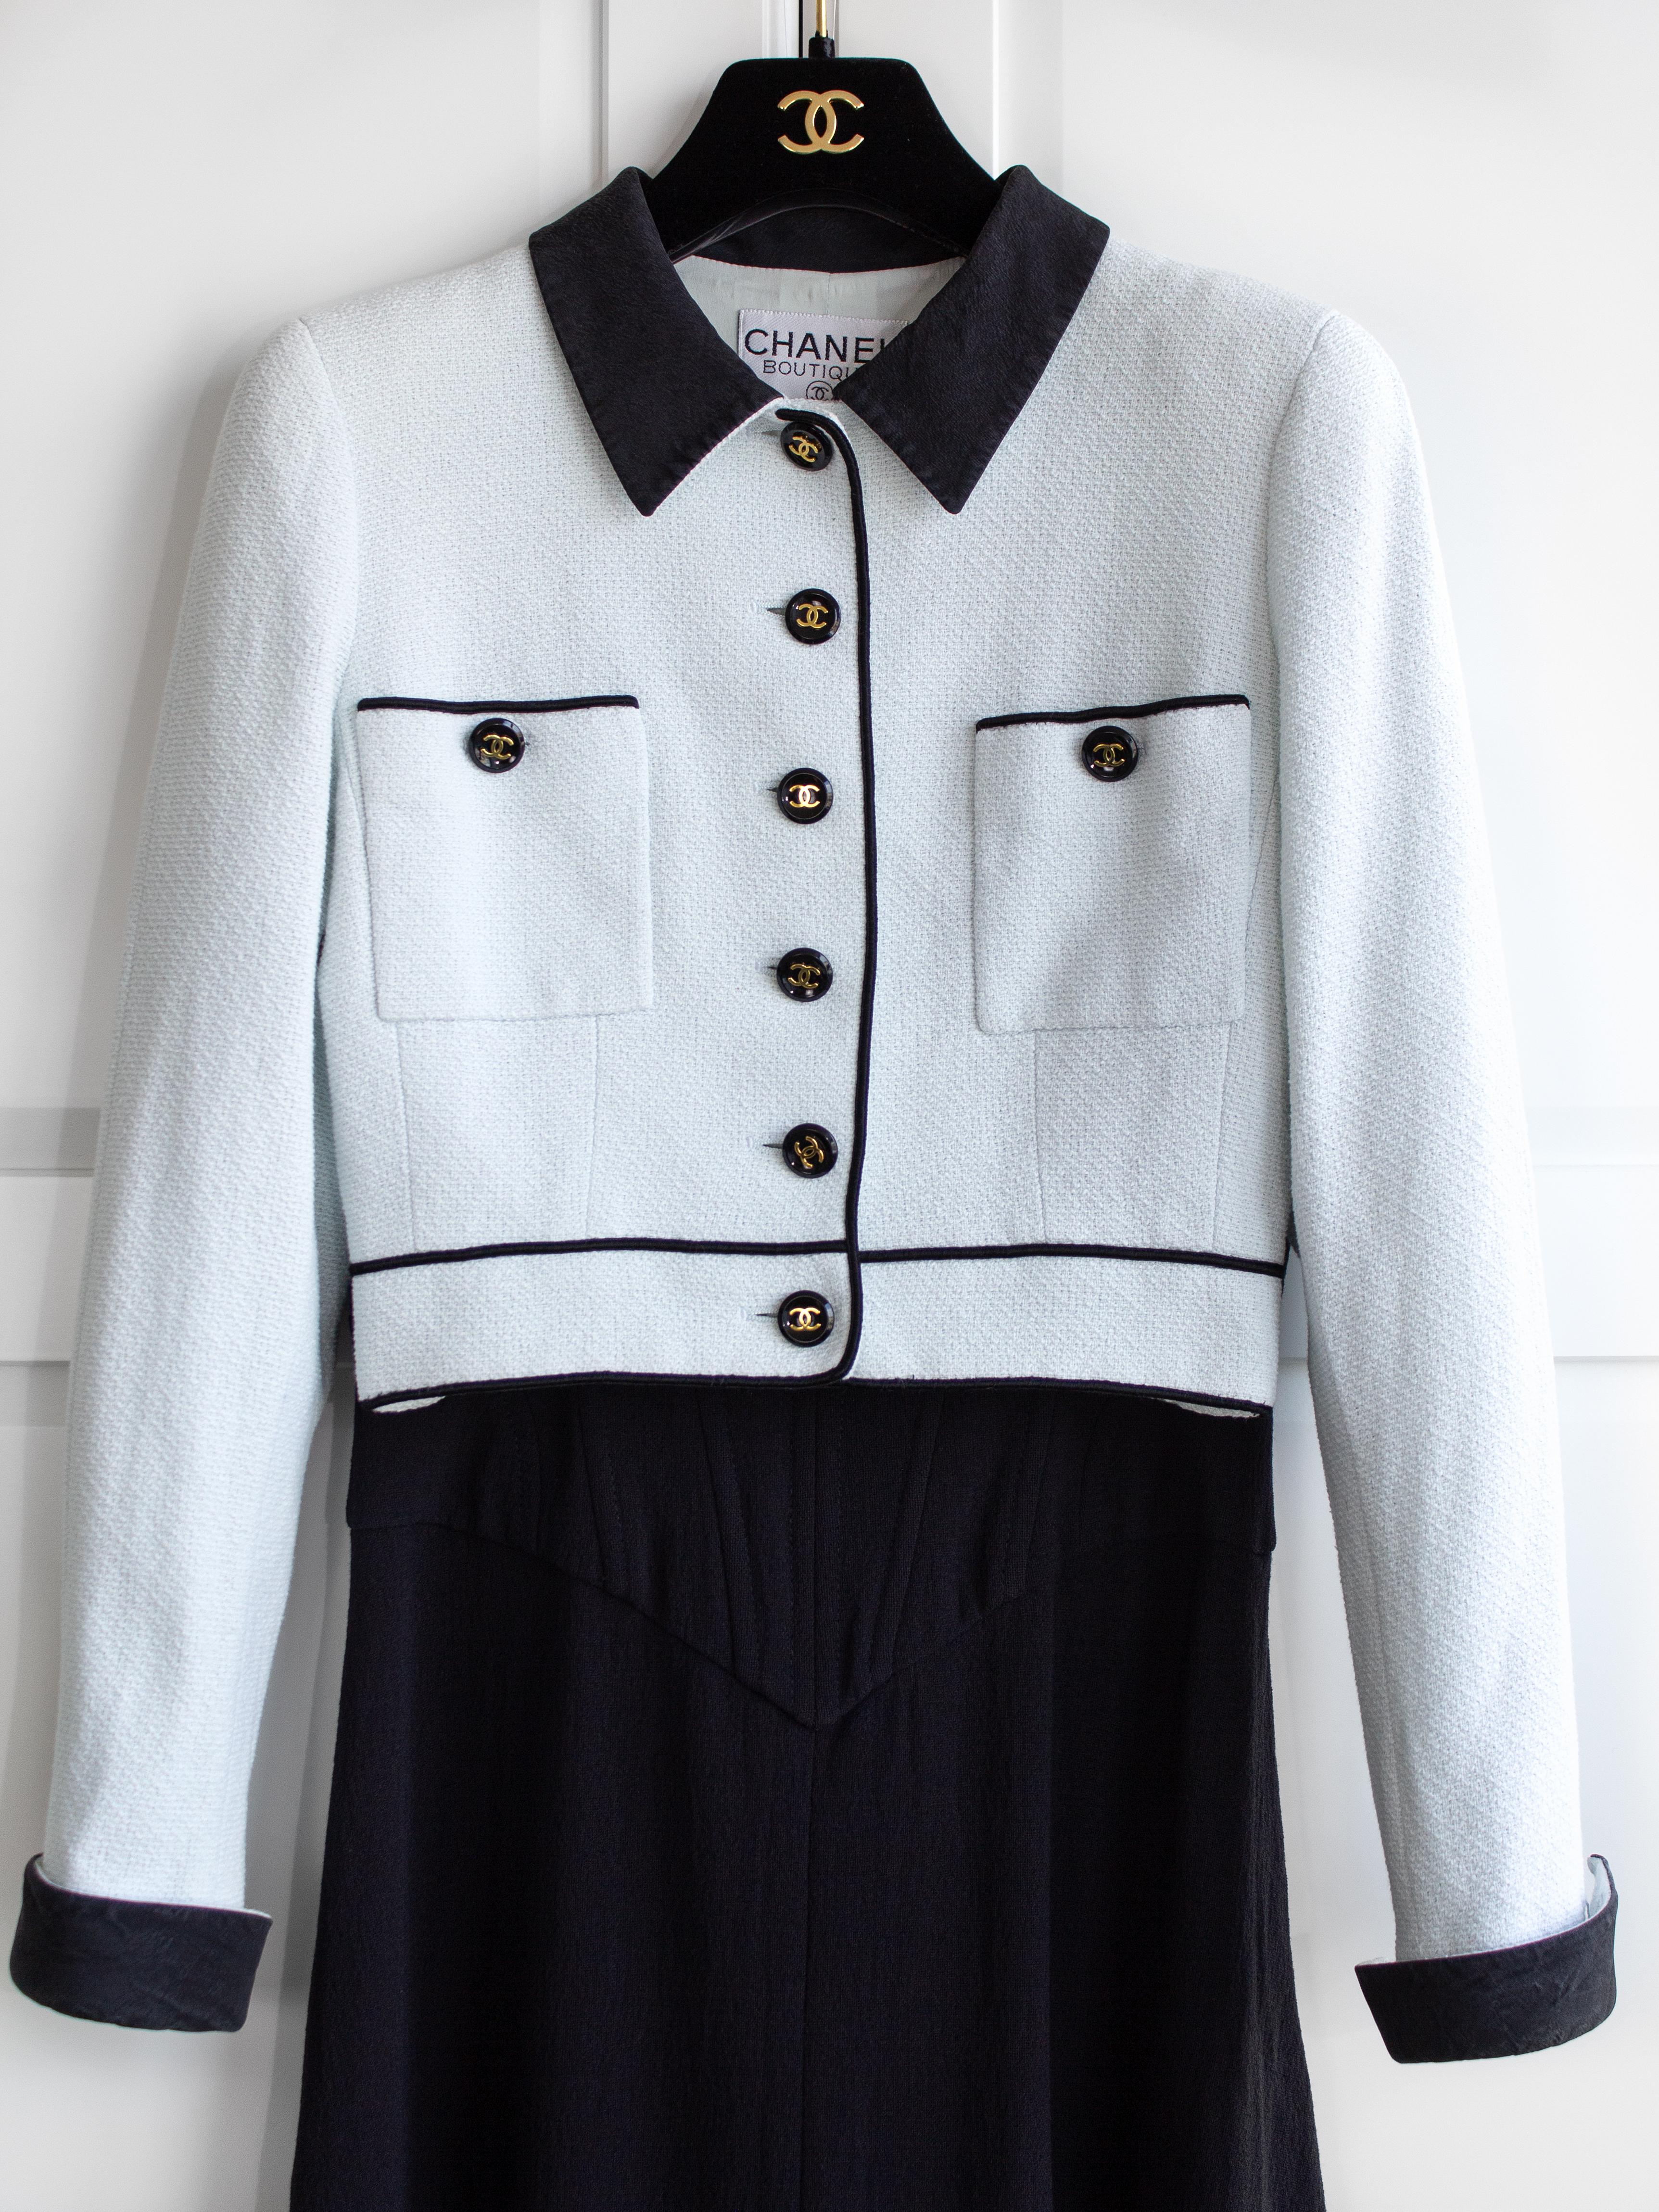 Chanel Vintage S/S 1995 Barbie Cropped White Blue Black 95P Jacket Skirt Suit For Sale 1